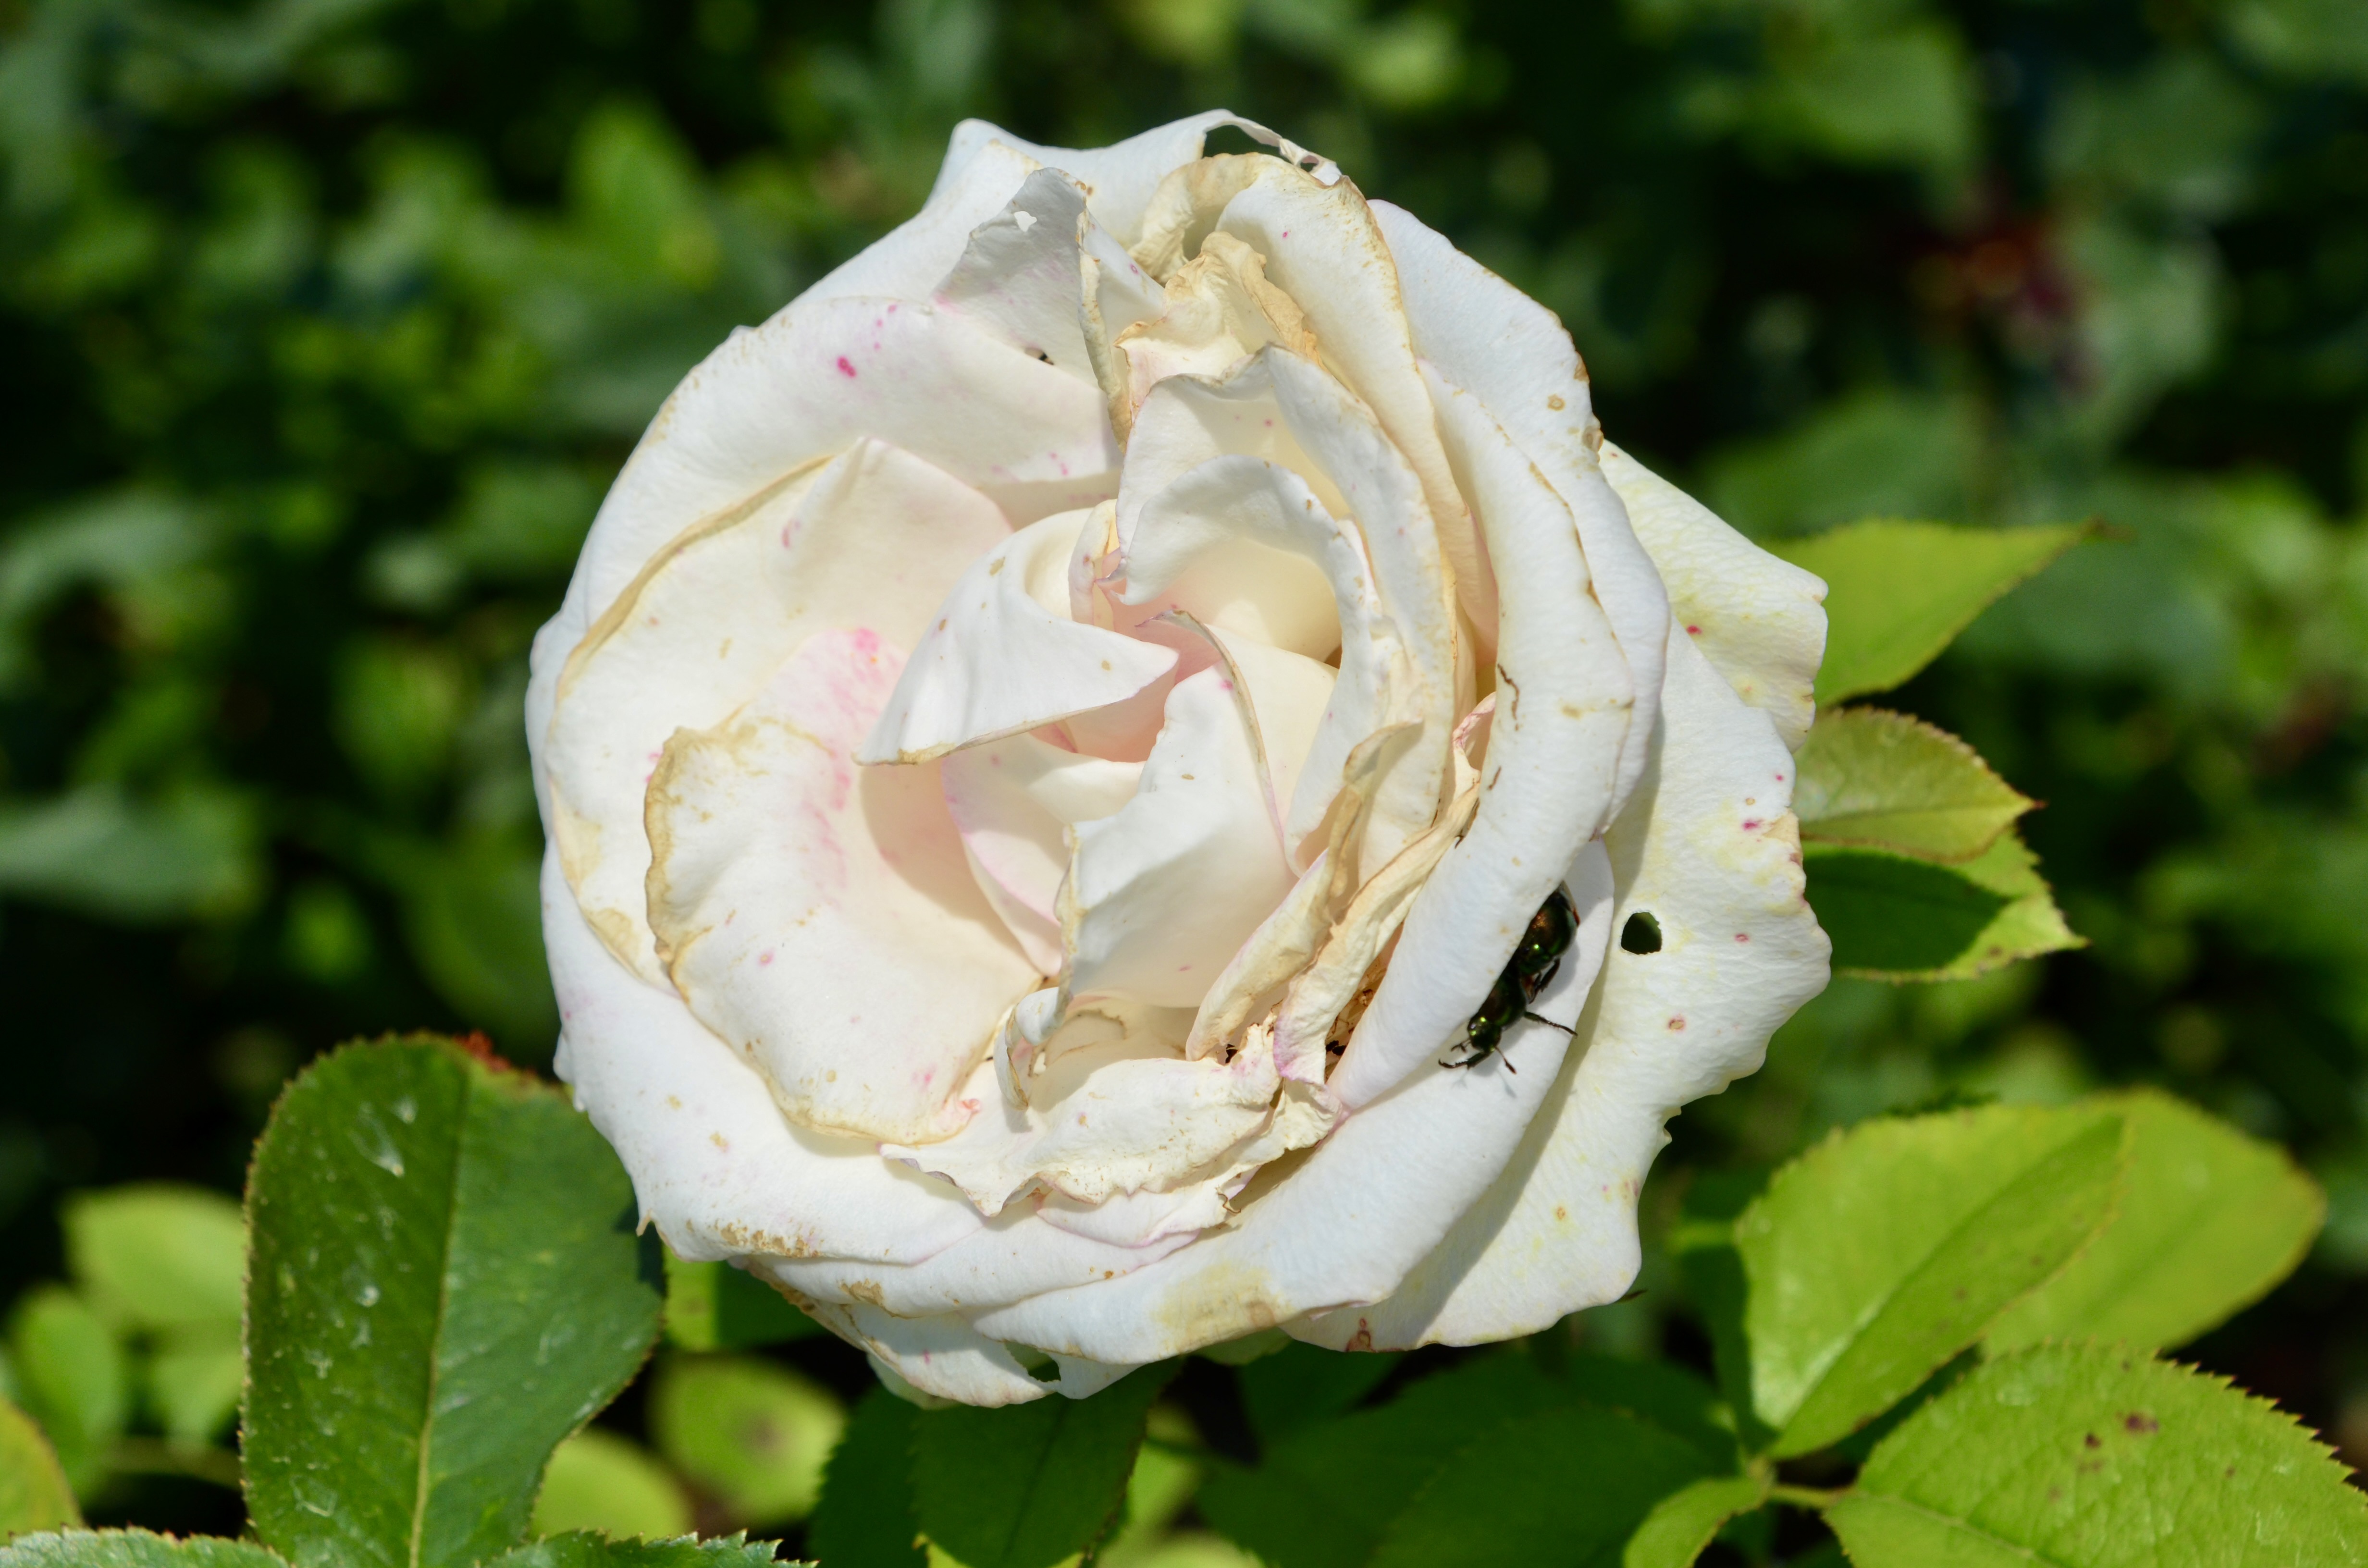 Dow Gardens Midland Michigan White Rose Close Up